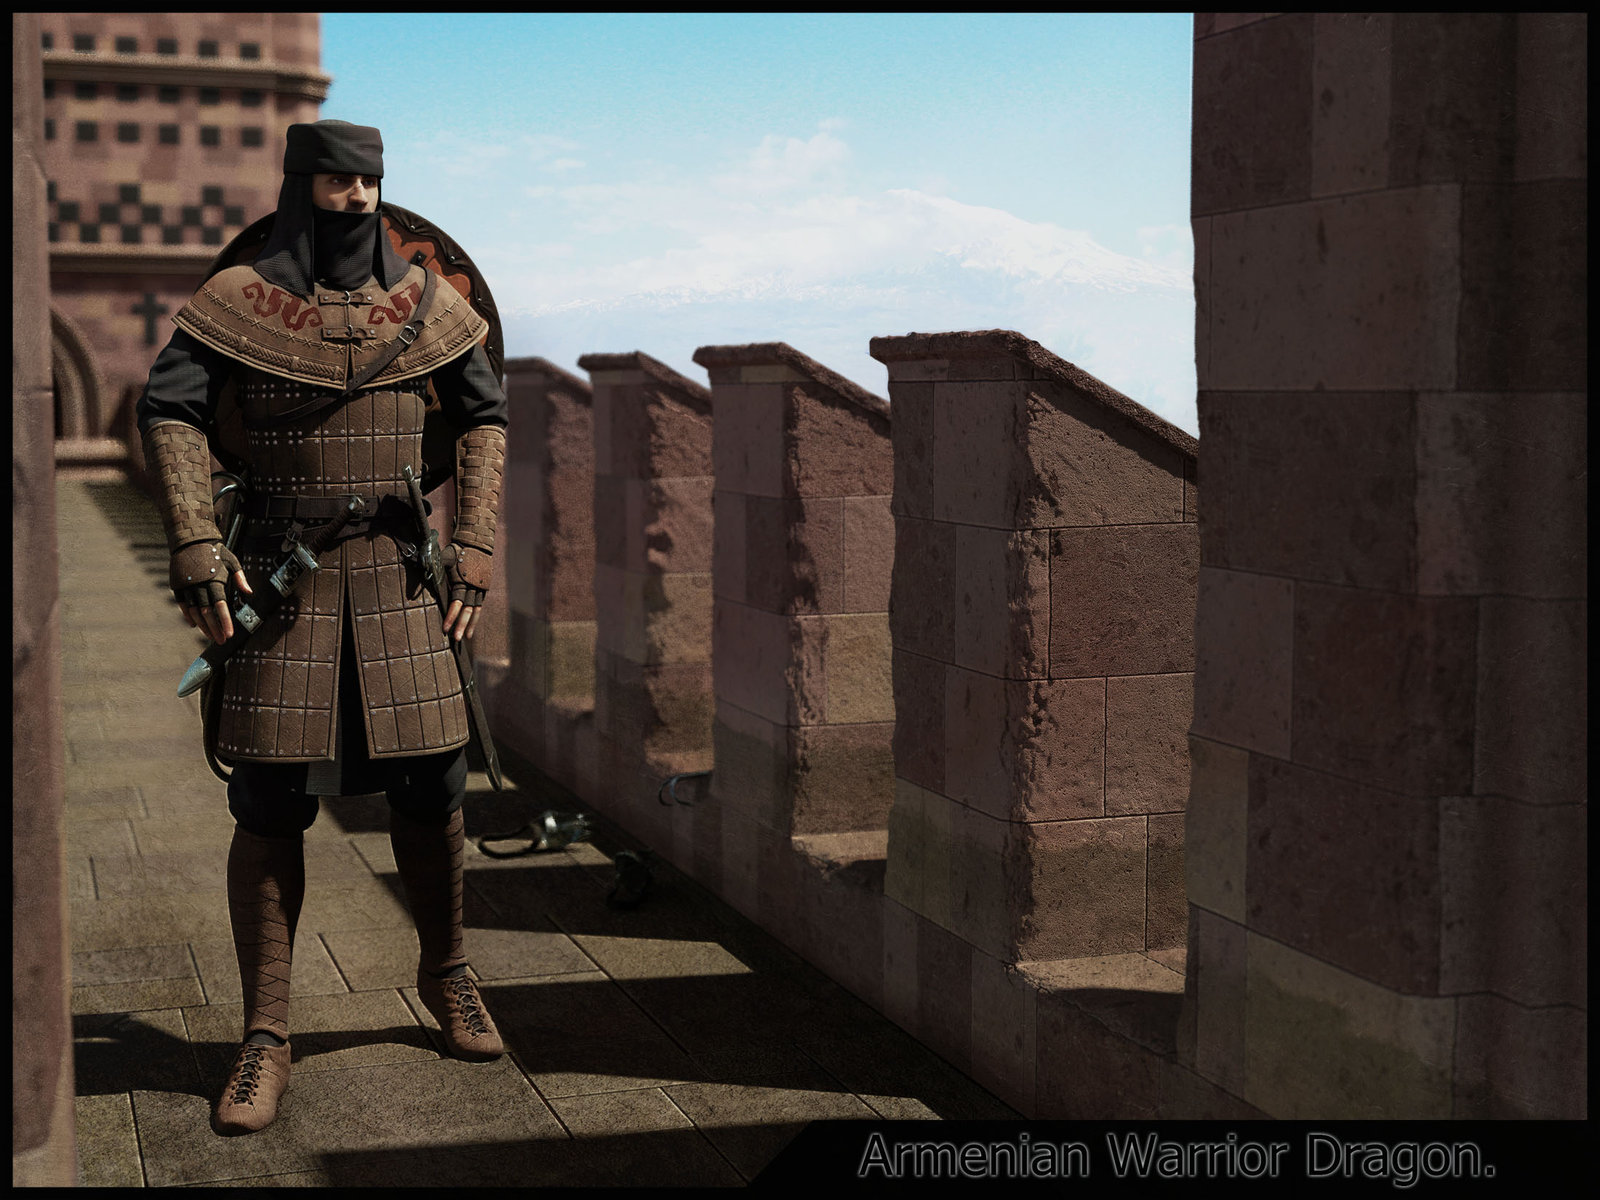 armenian-warrior-wishapner-800-1300.jpg